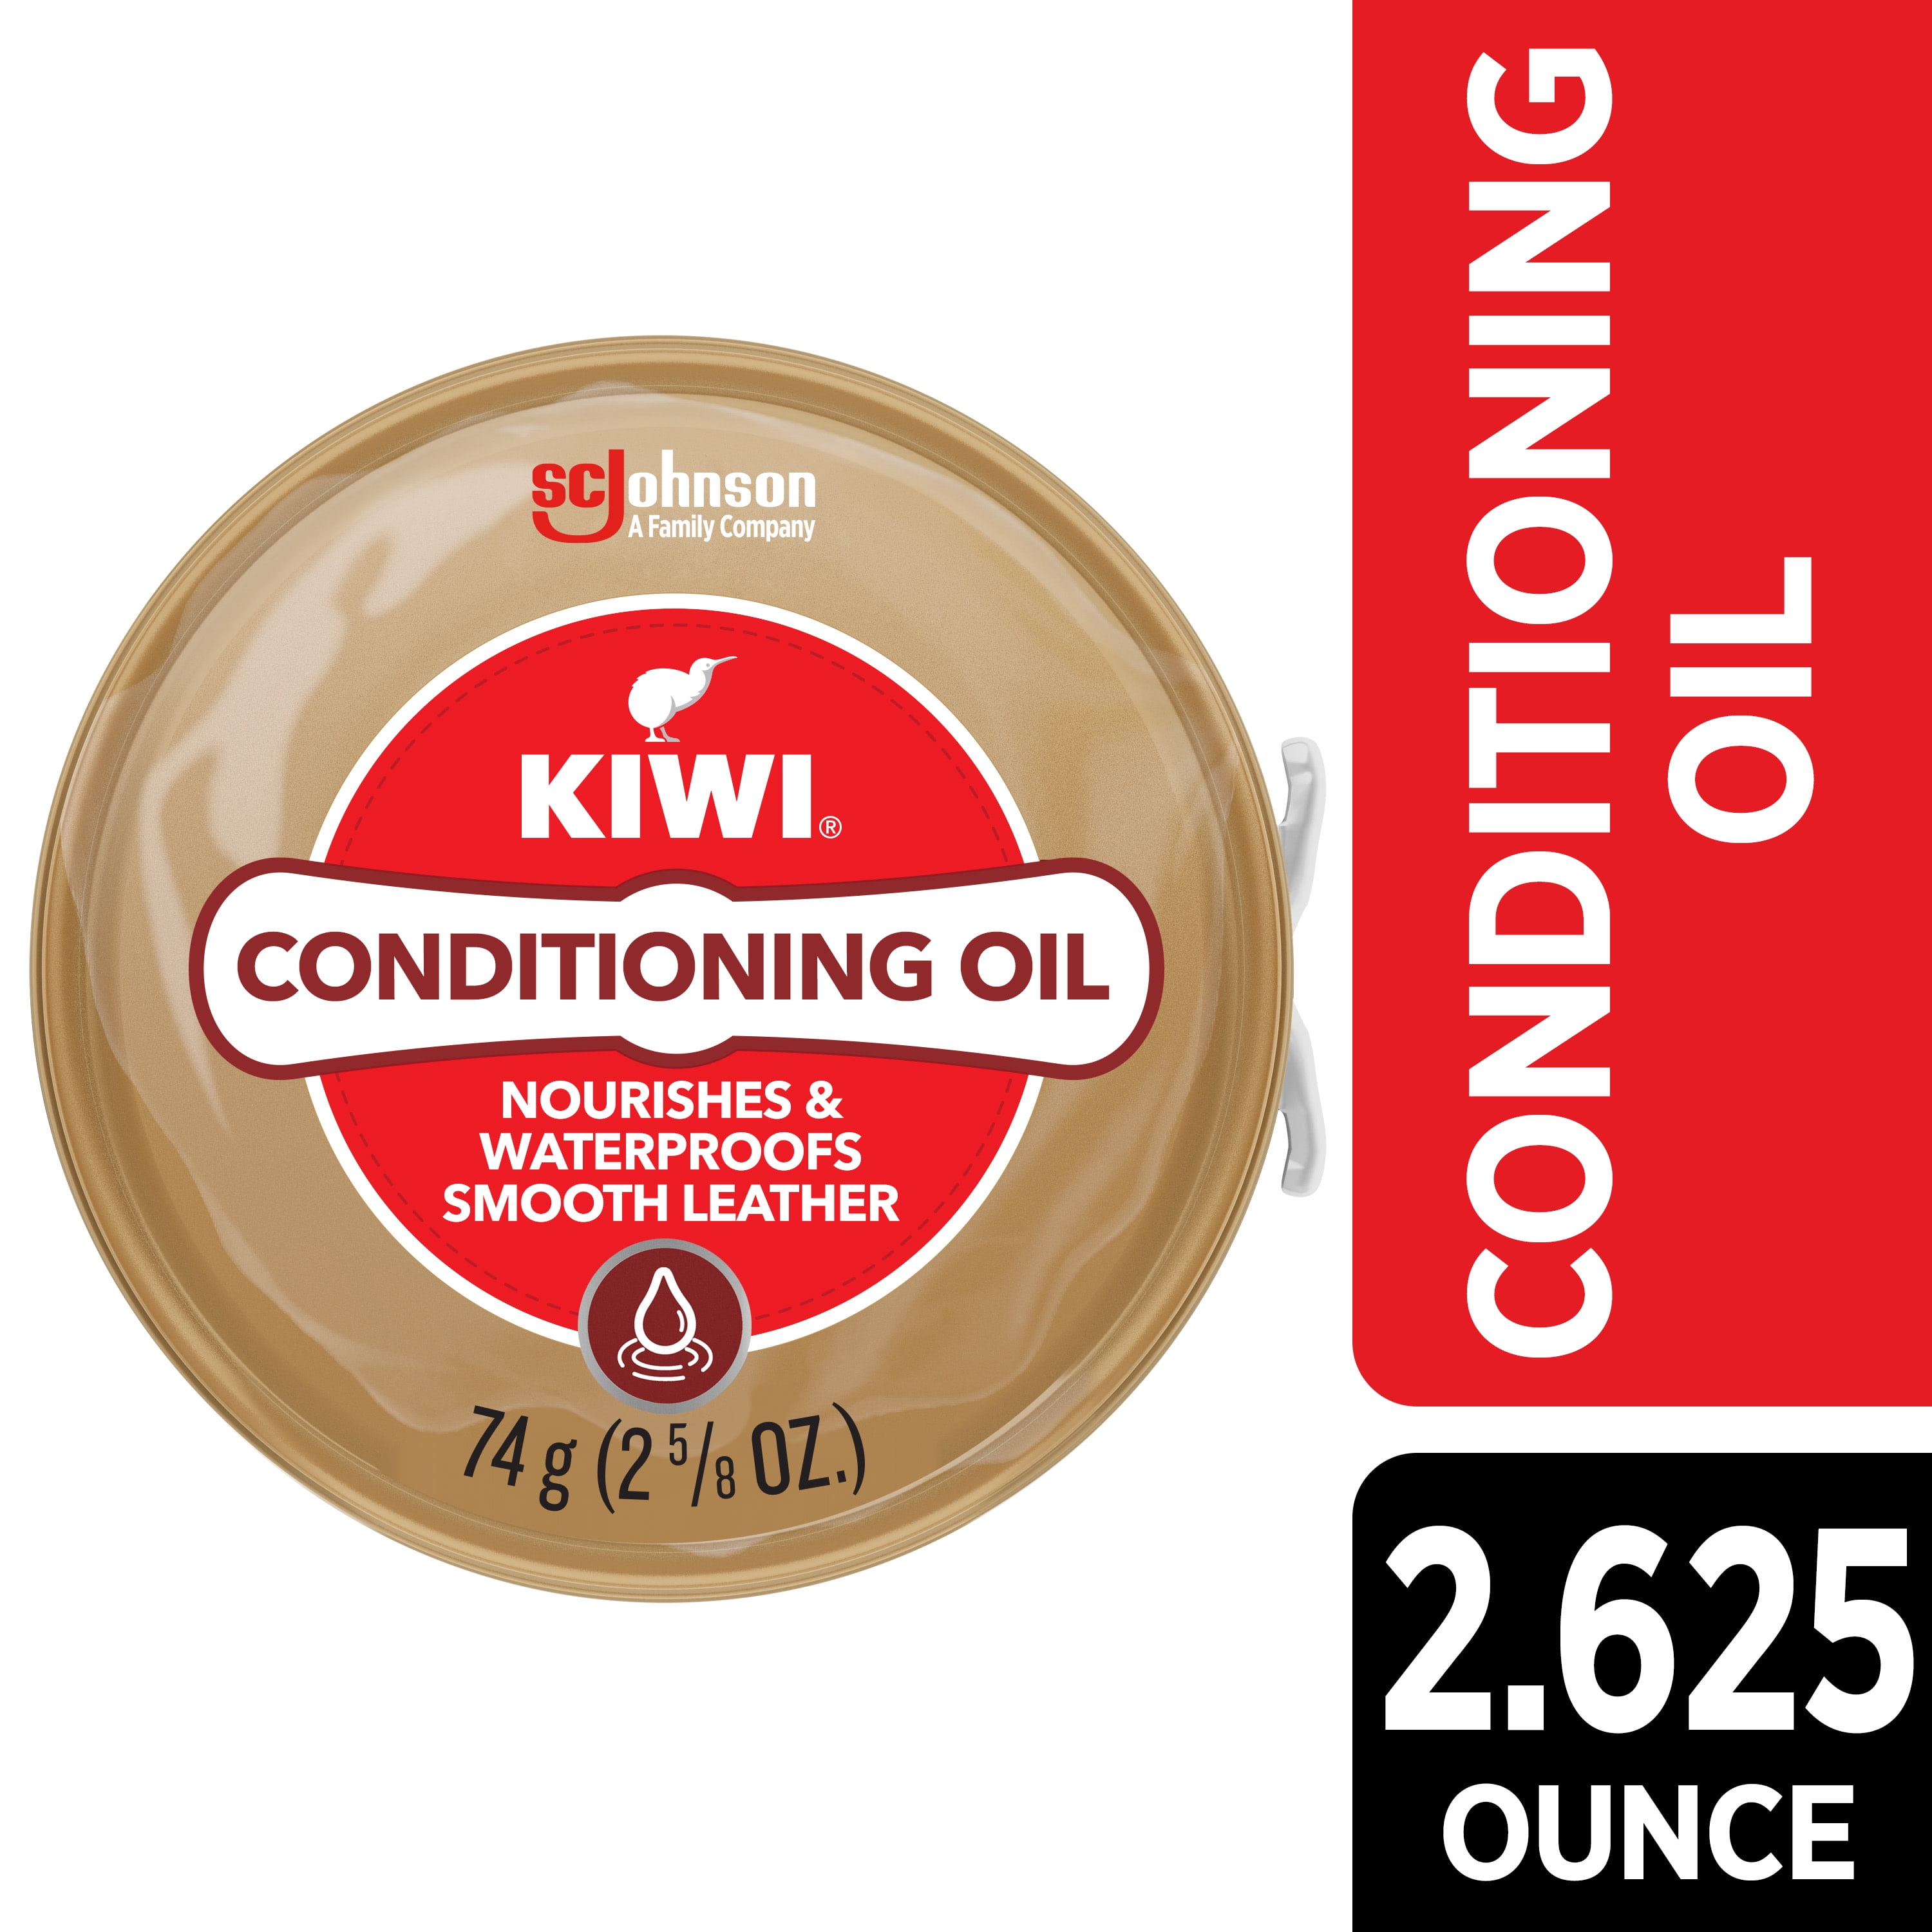 KIWI Conditioning Oil, 2.625 Oz (1Ct)